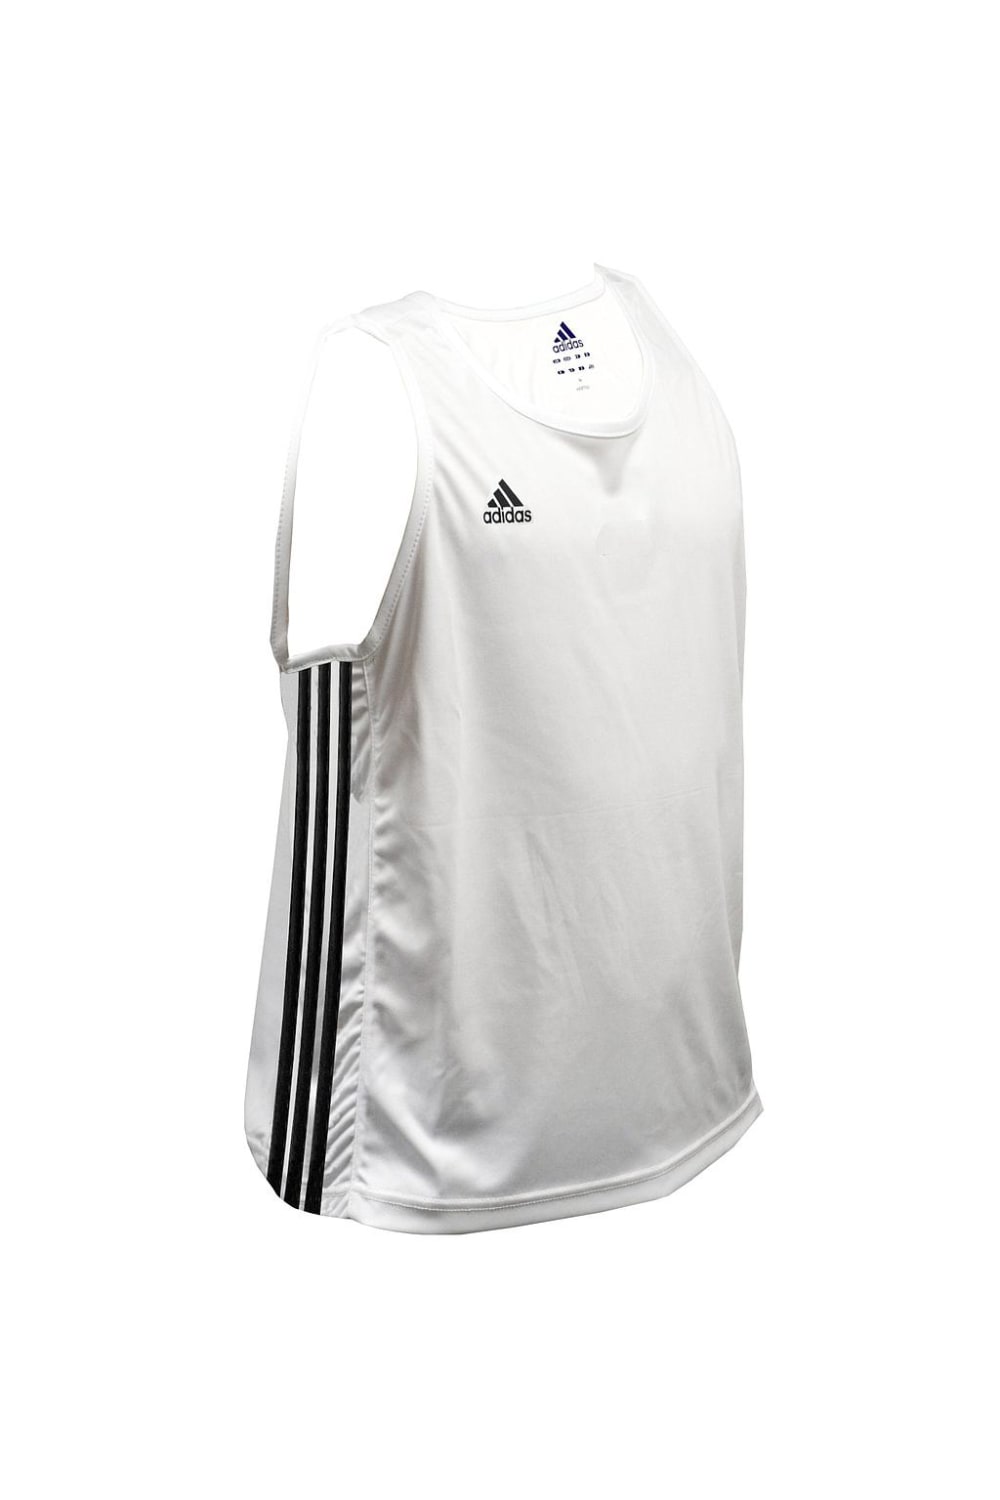 Adidas Mens Boxing Vest (White)